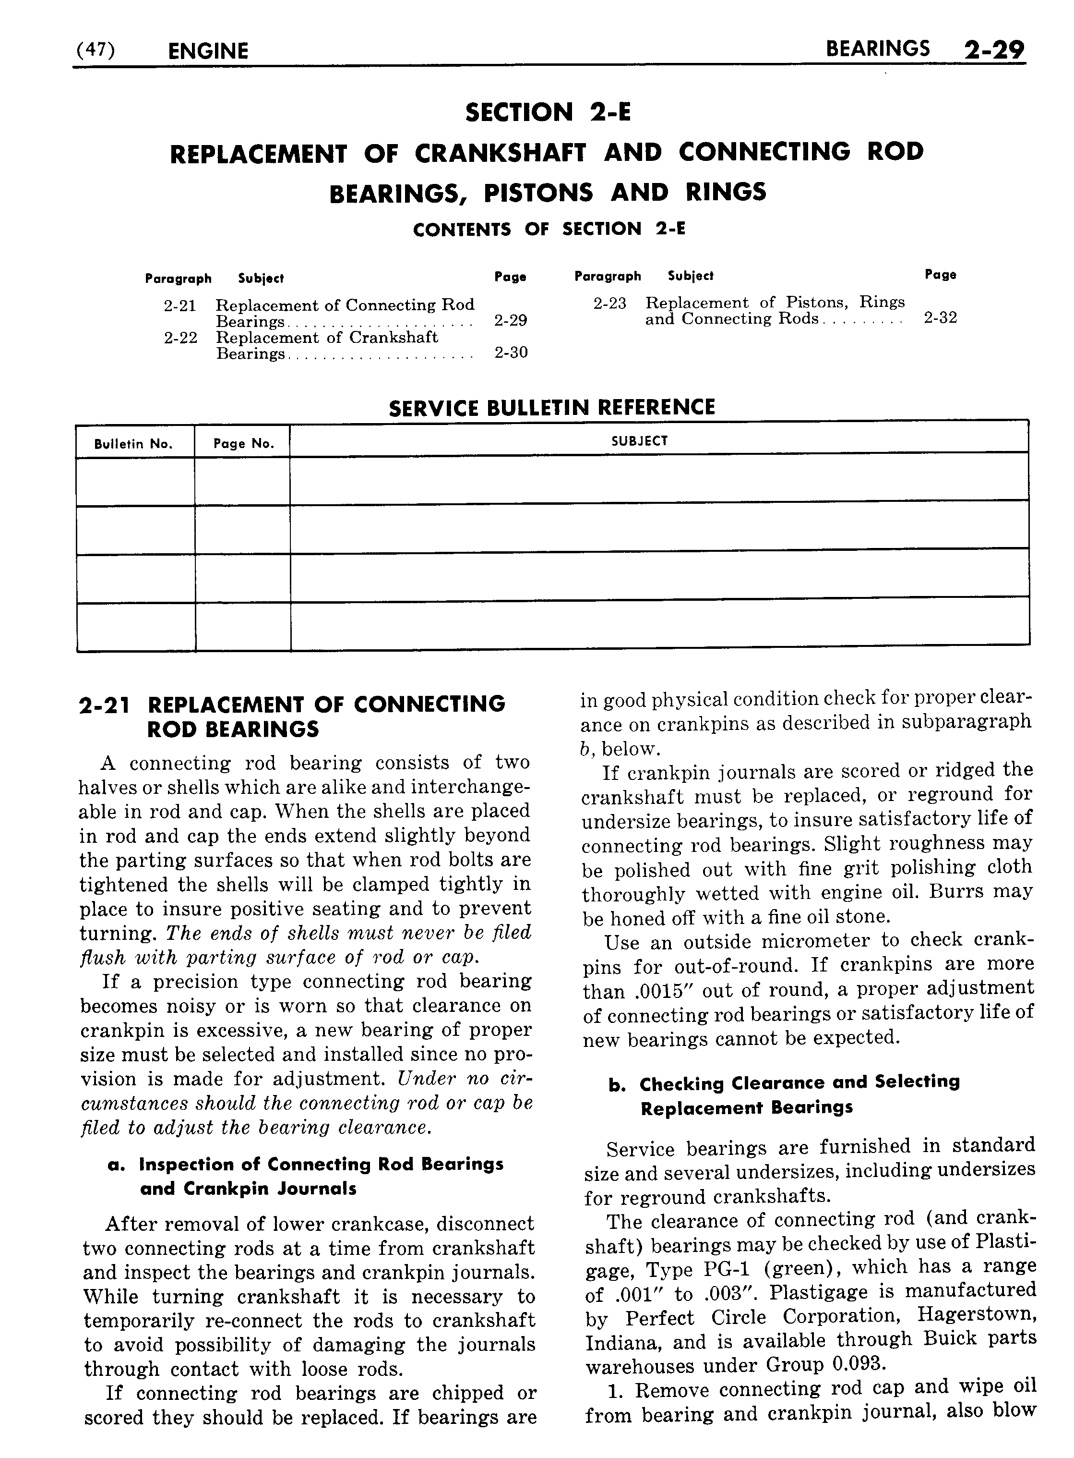 n_03 1951 Buick Shop Manual - Engine-029-029.jpg